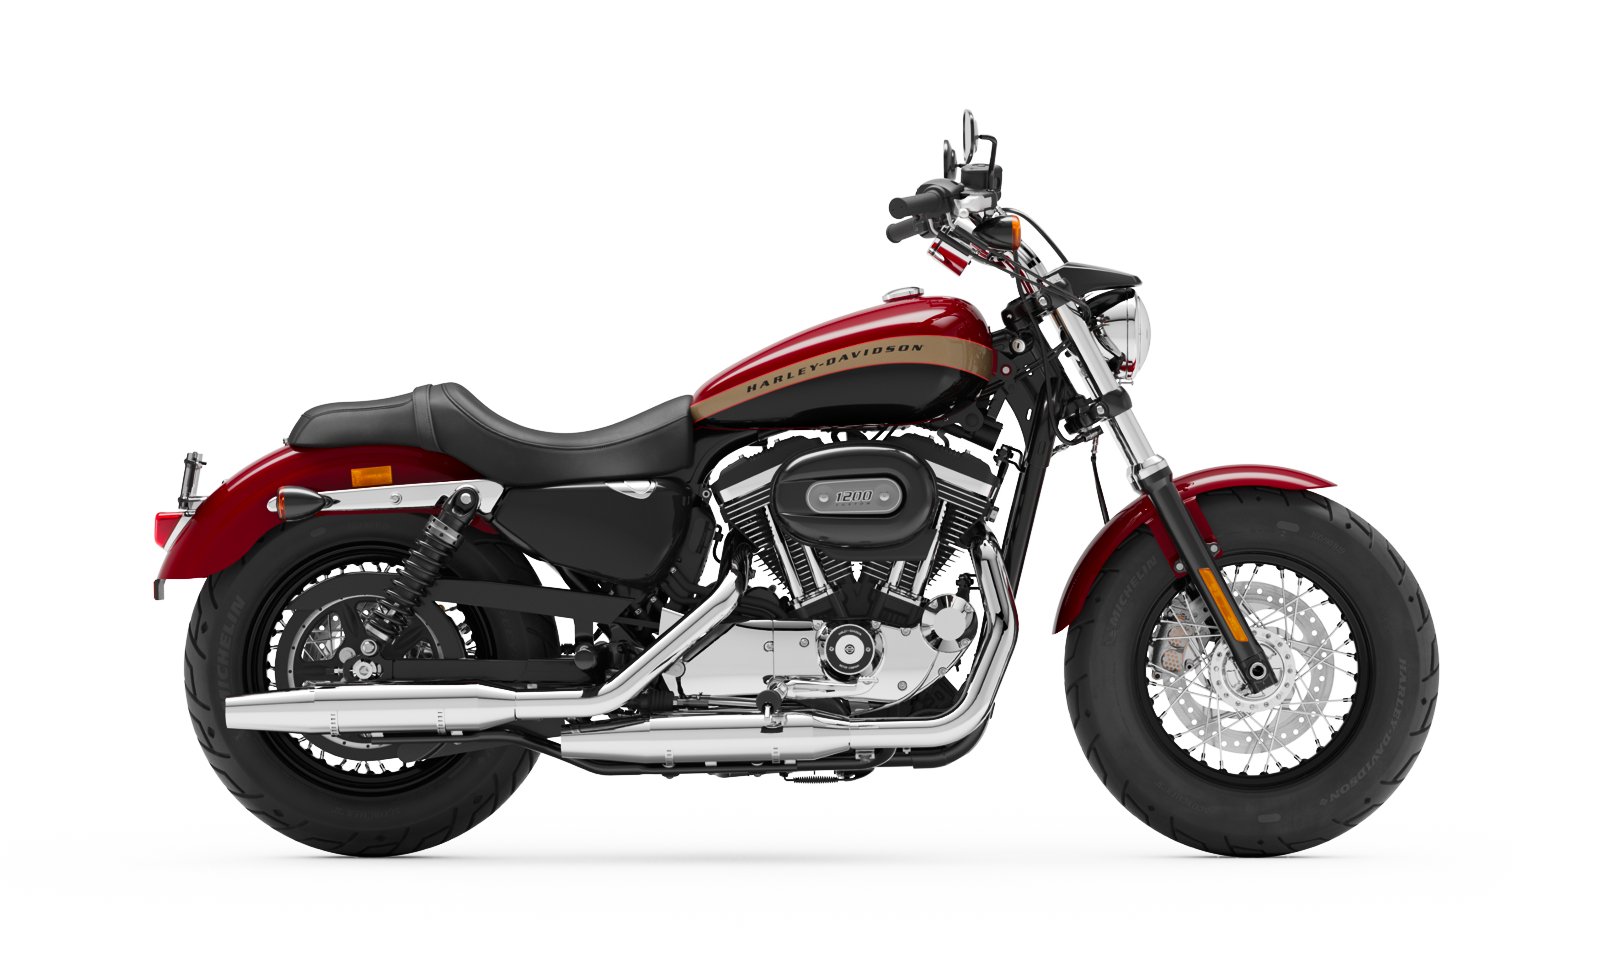 2020 Harley Davidson 1200 Custom Motorcycle Harley Davidson India